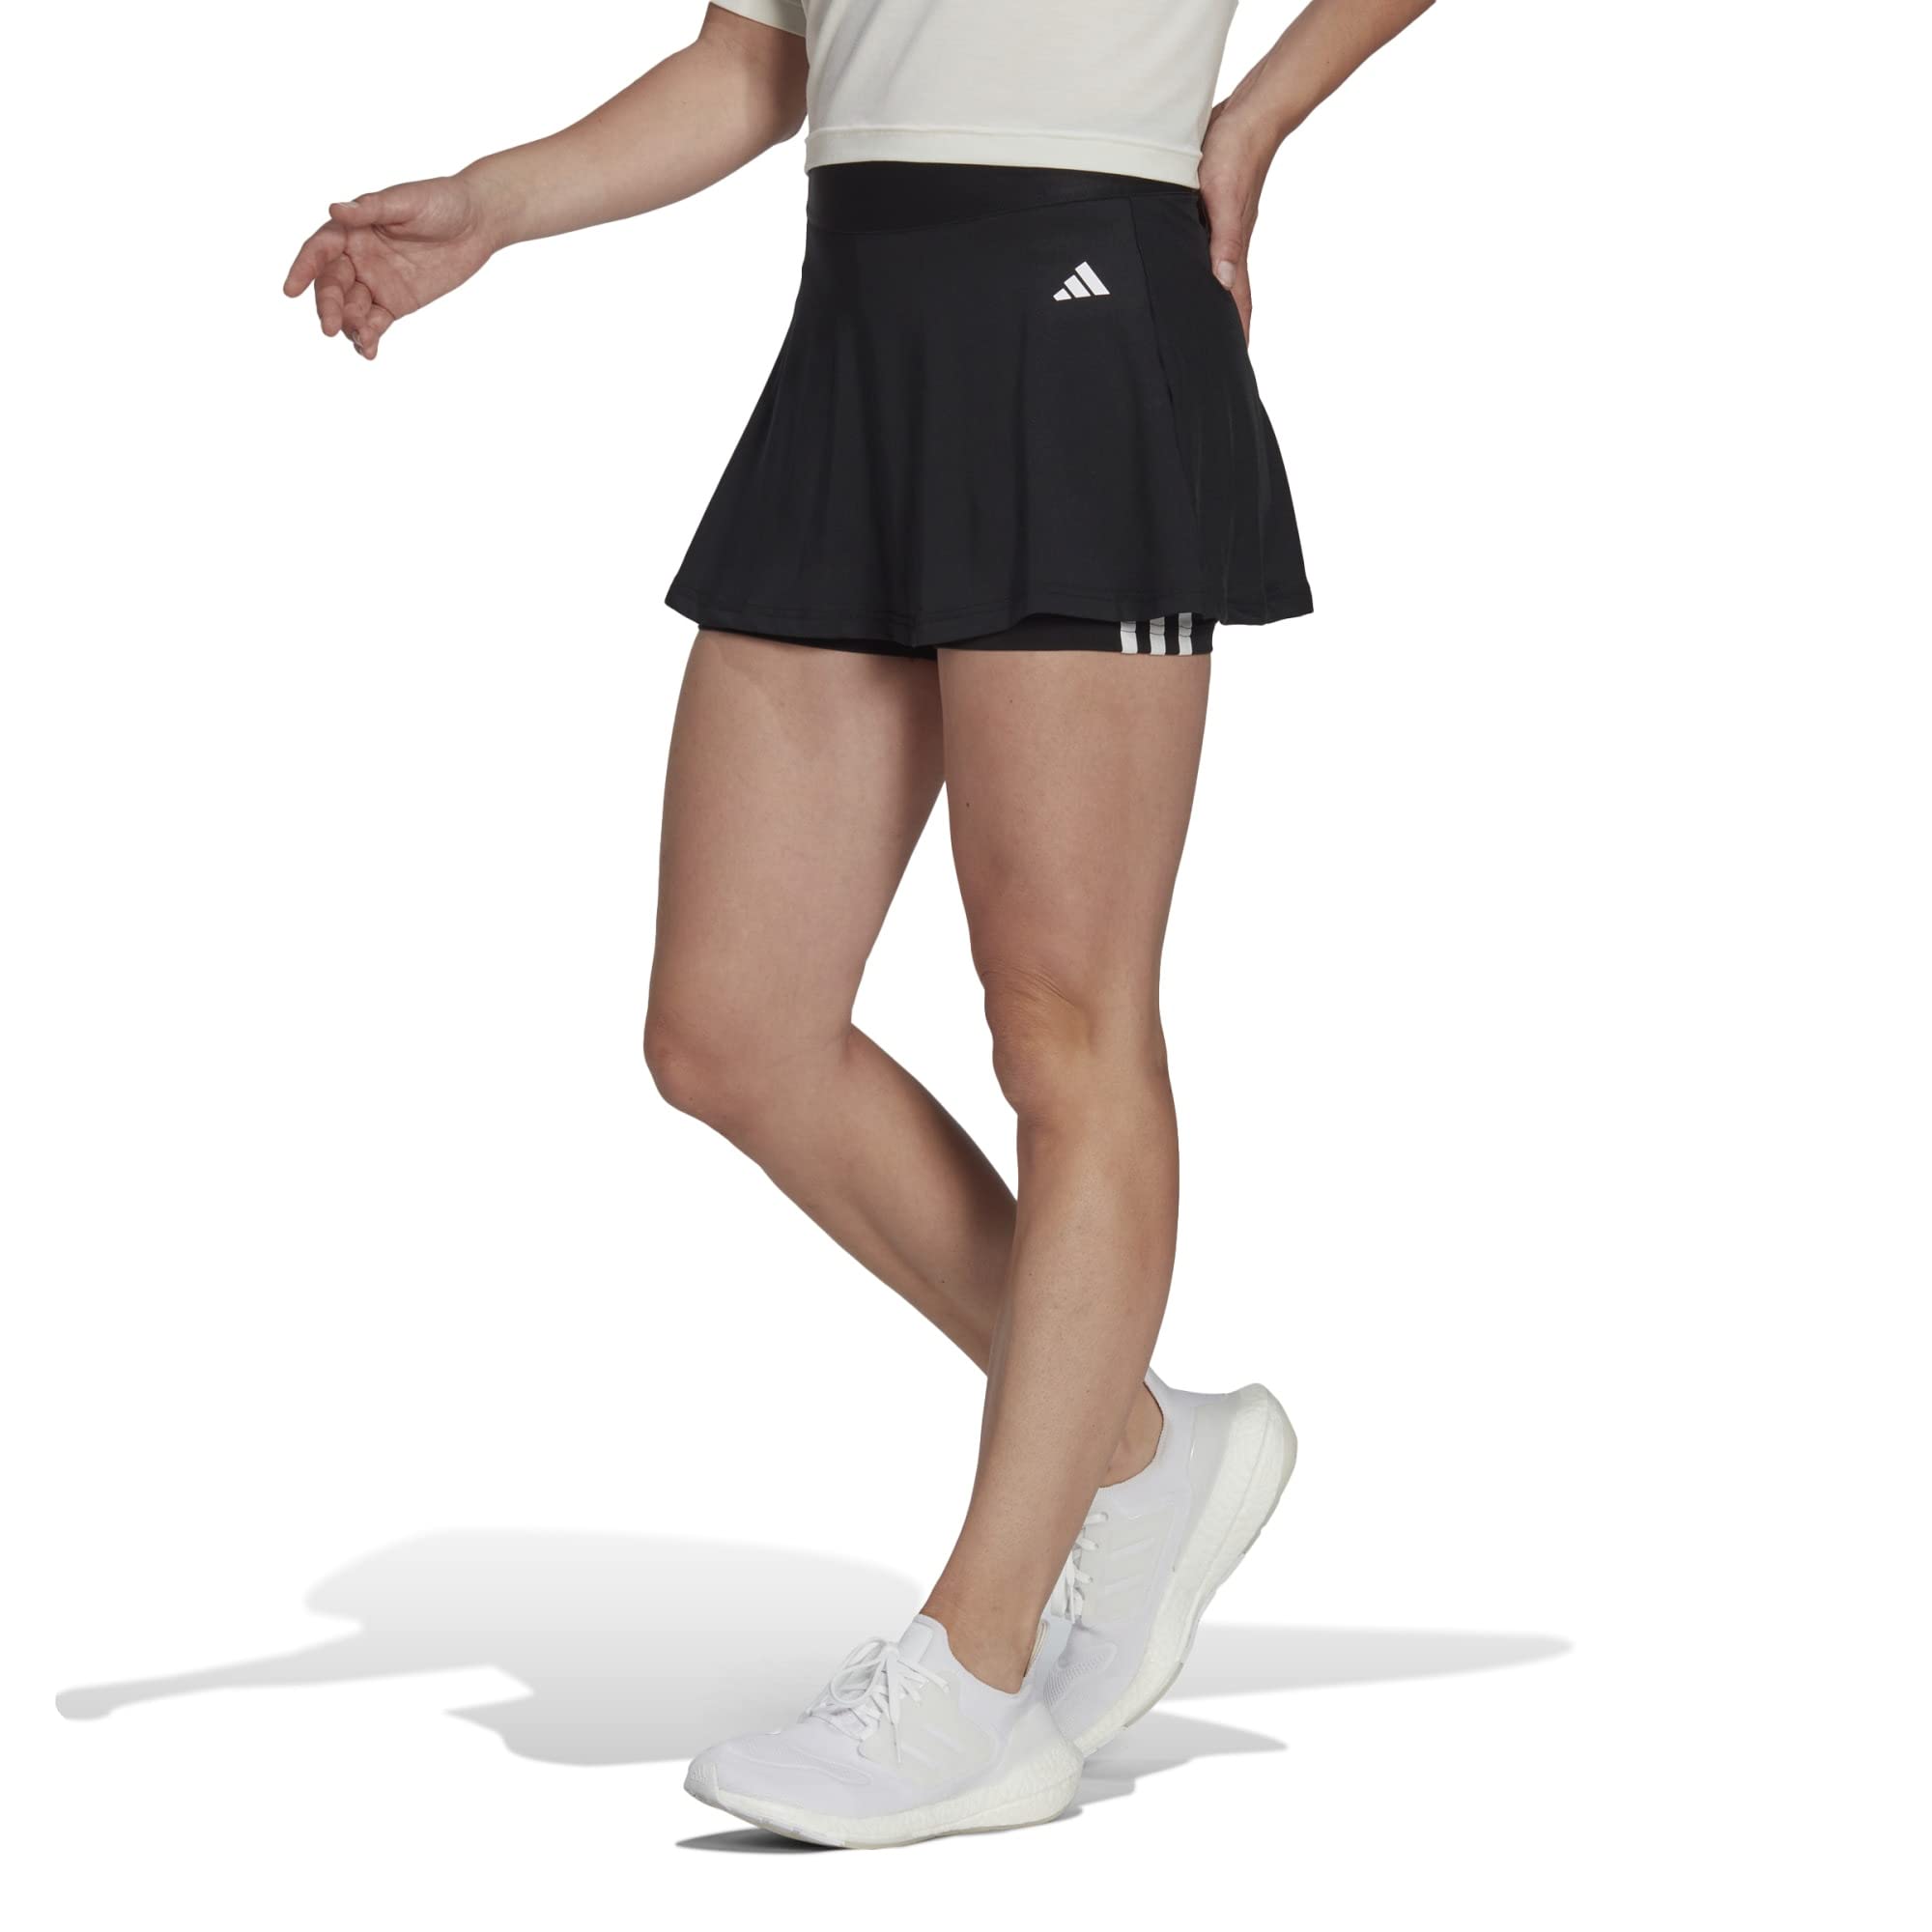 Обычная юбка Aeroready Training Essentials с 3 полосками Adidas